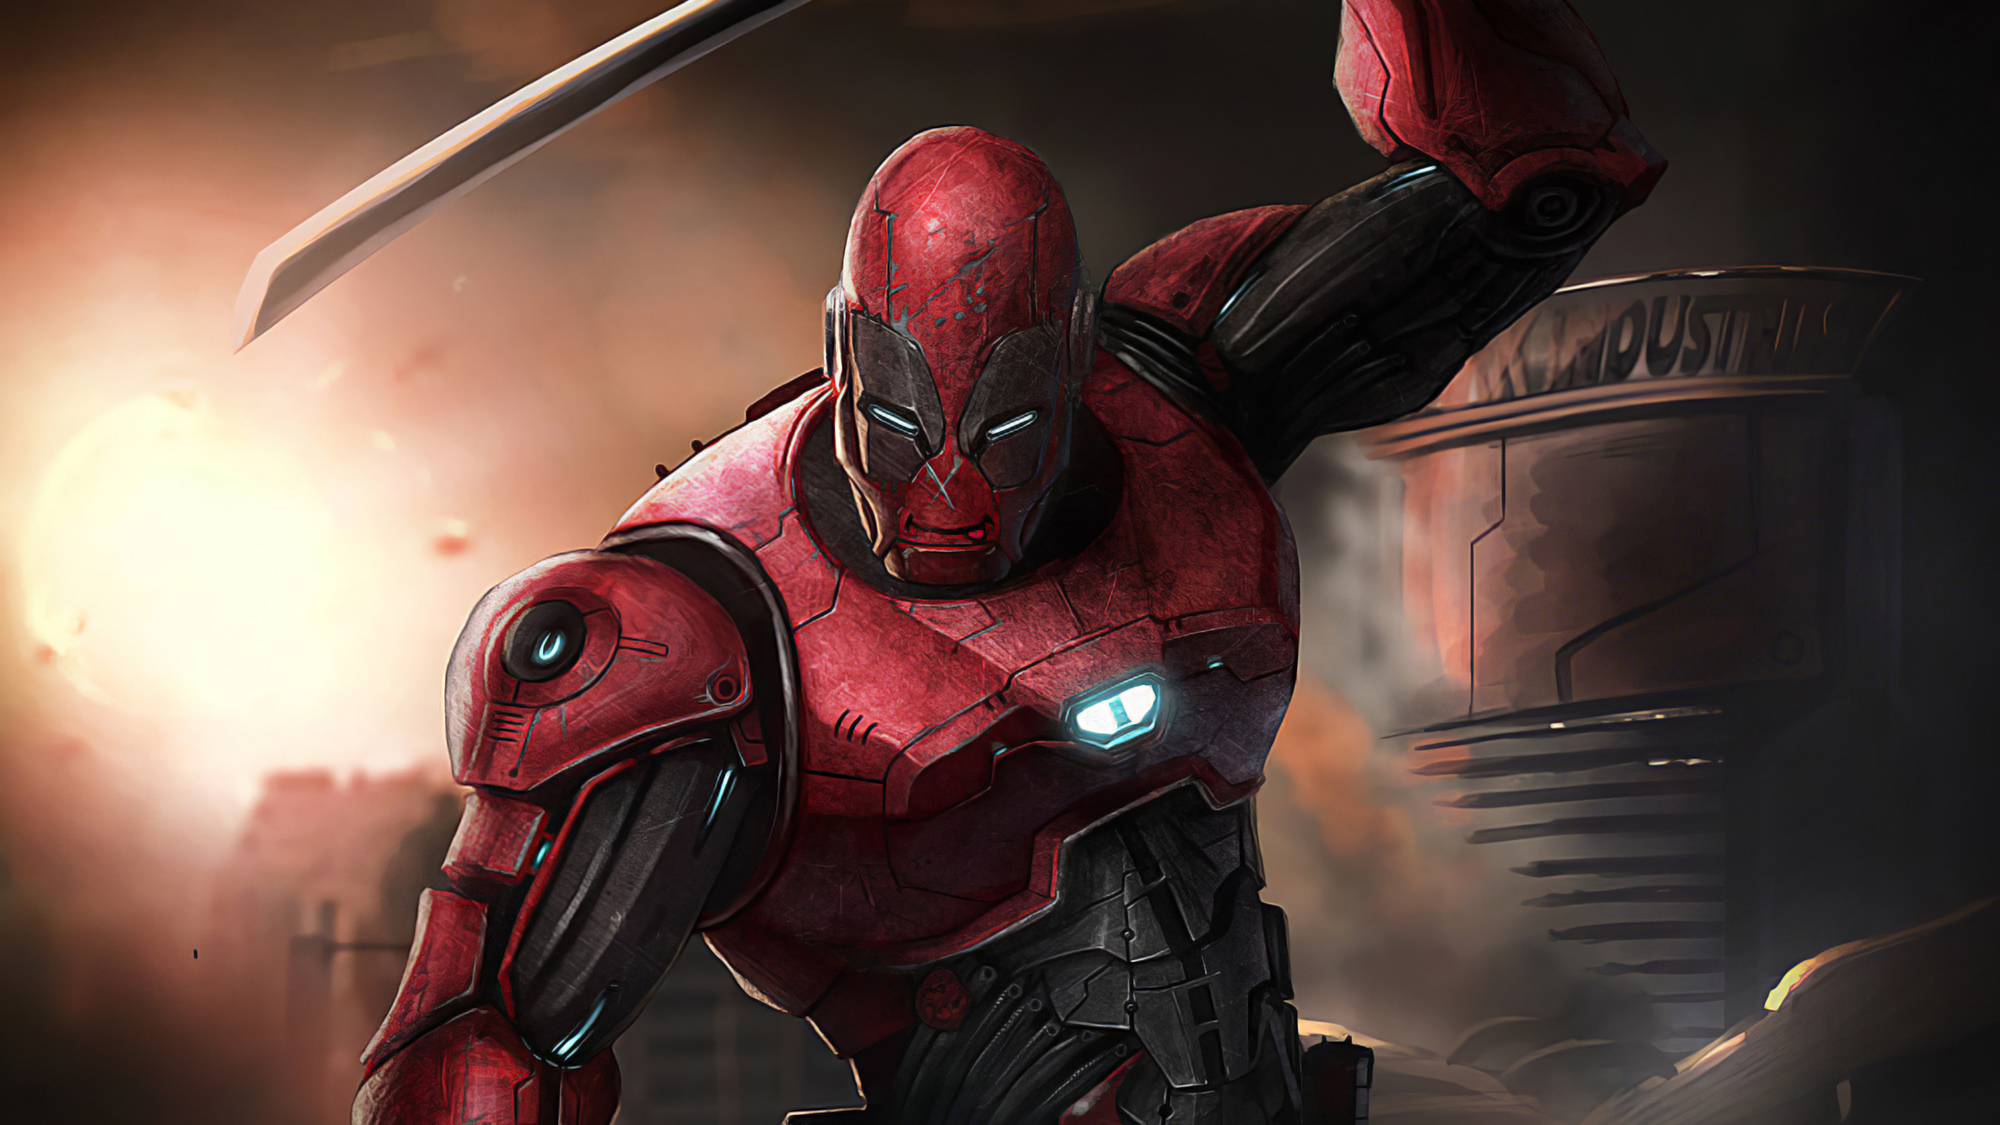 Wallpapers Iron Man Deadpool superheroes on the desktop